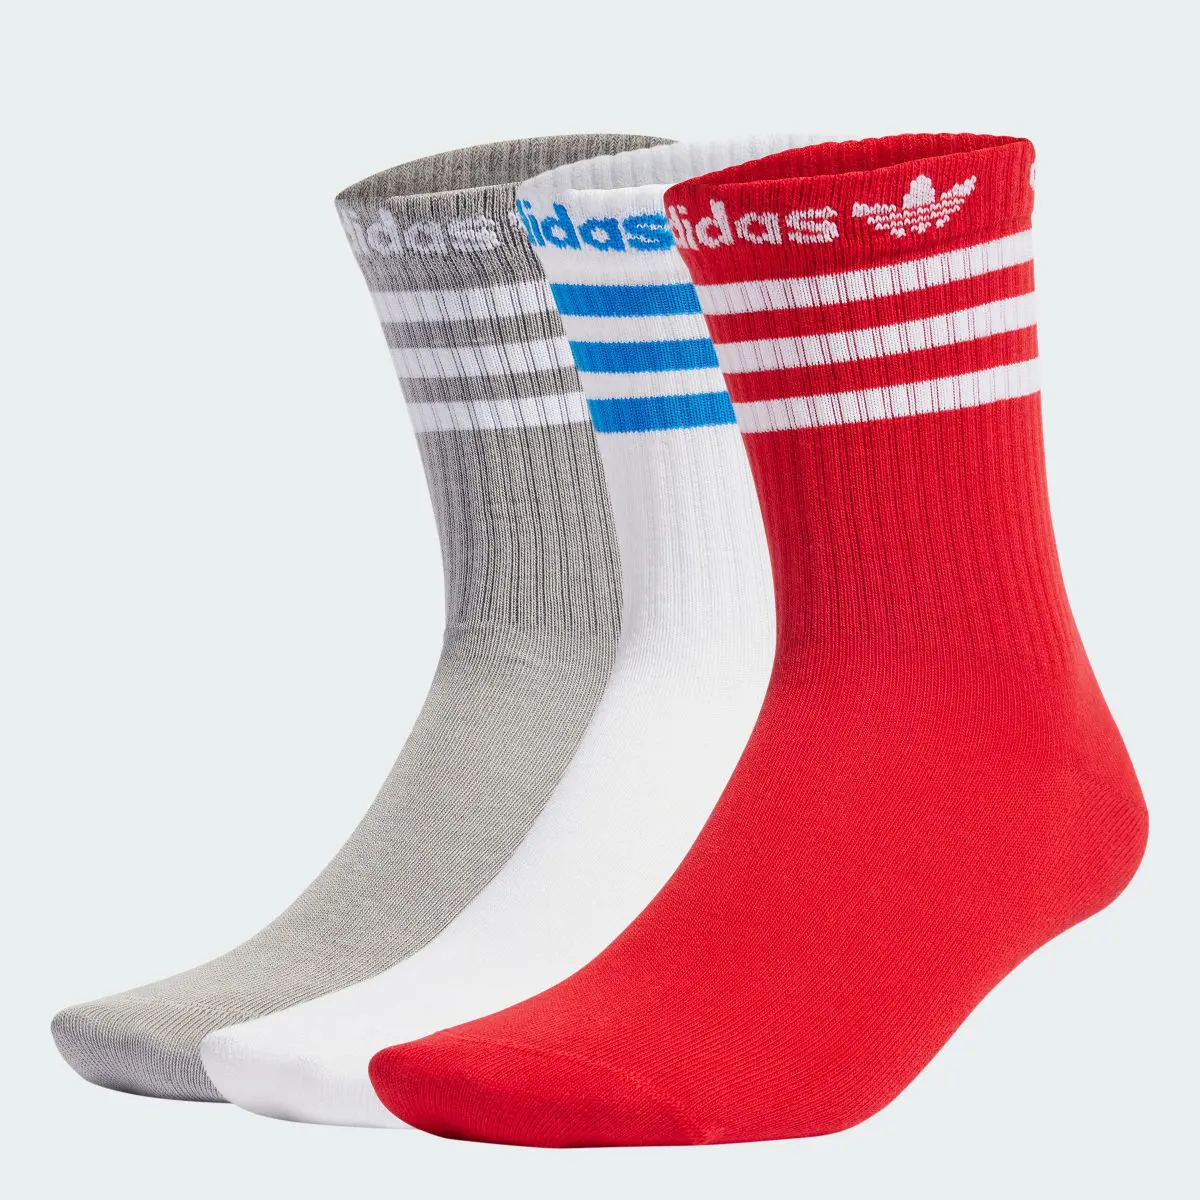 Adidas Bilekli Çorap - 3 Çift. 1